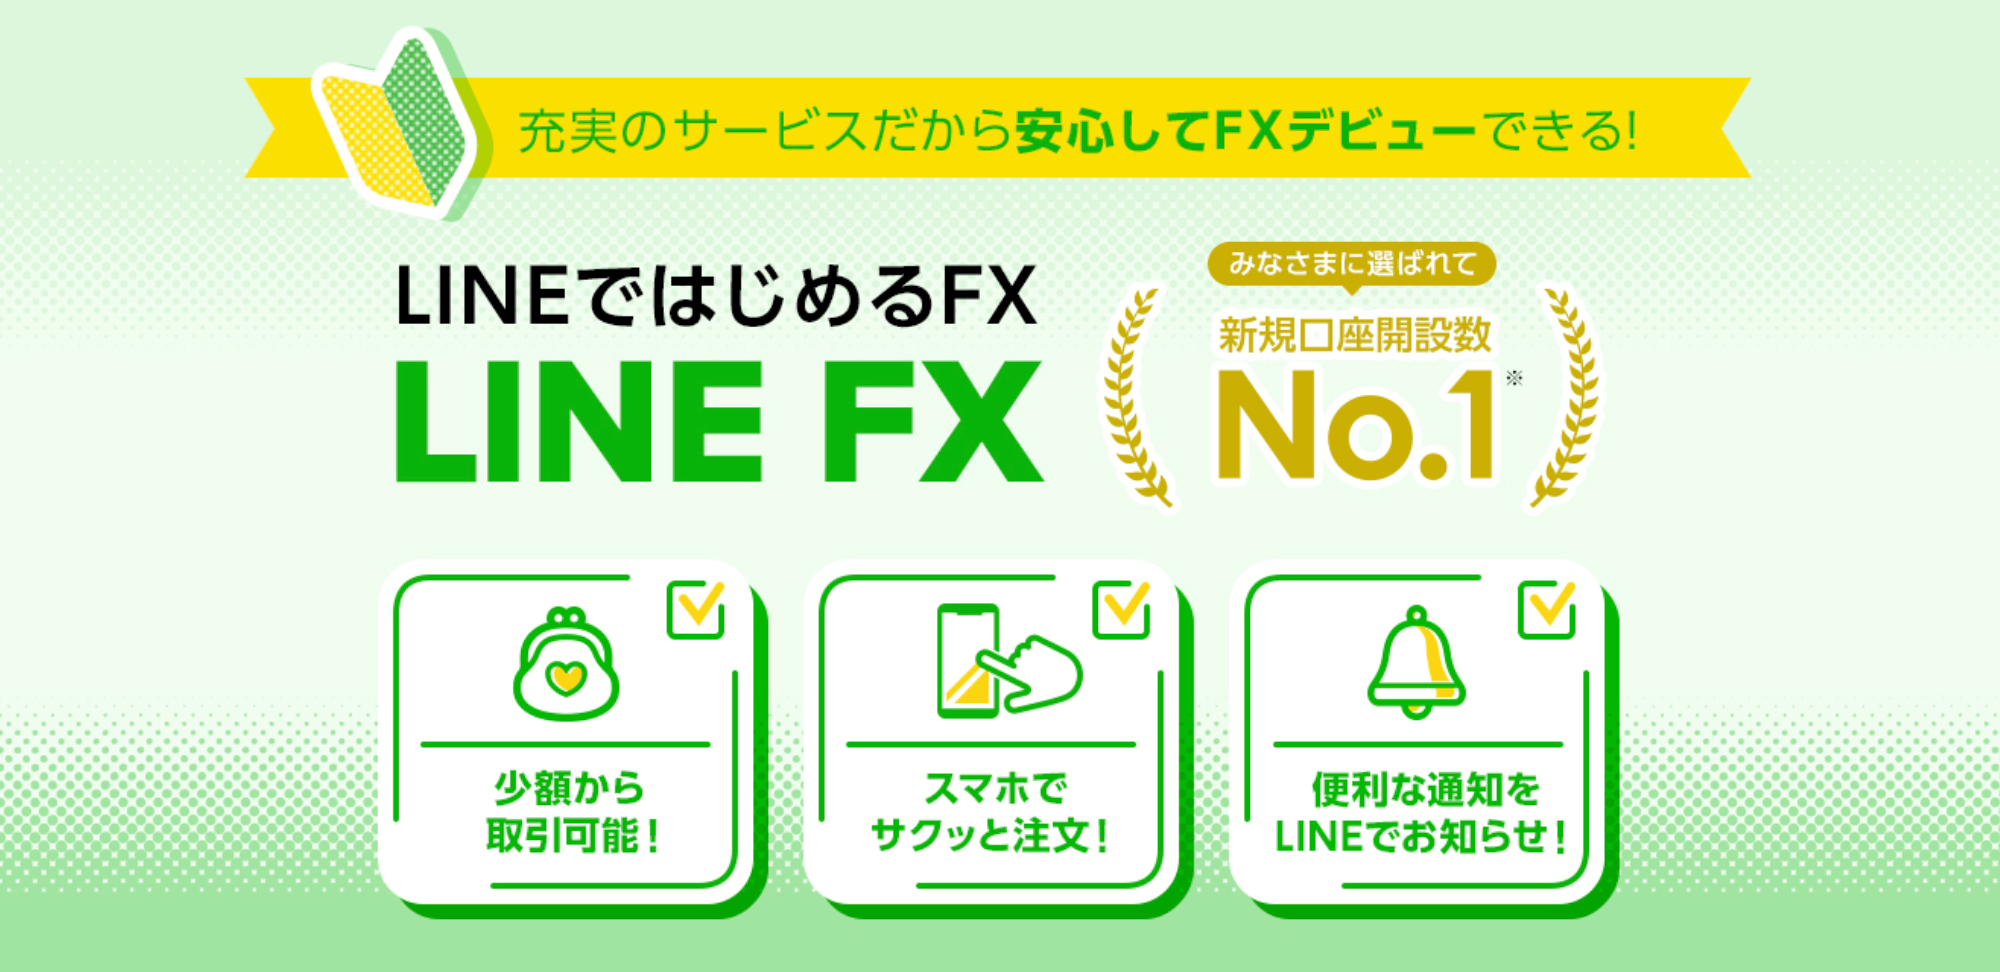 LINE証券のFXサービス「LINE FX」